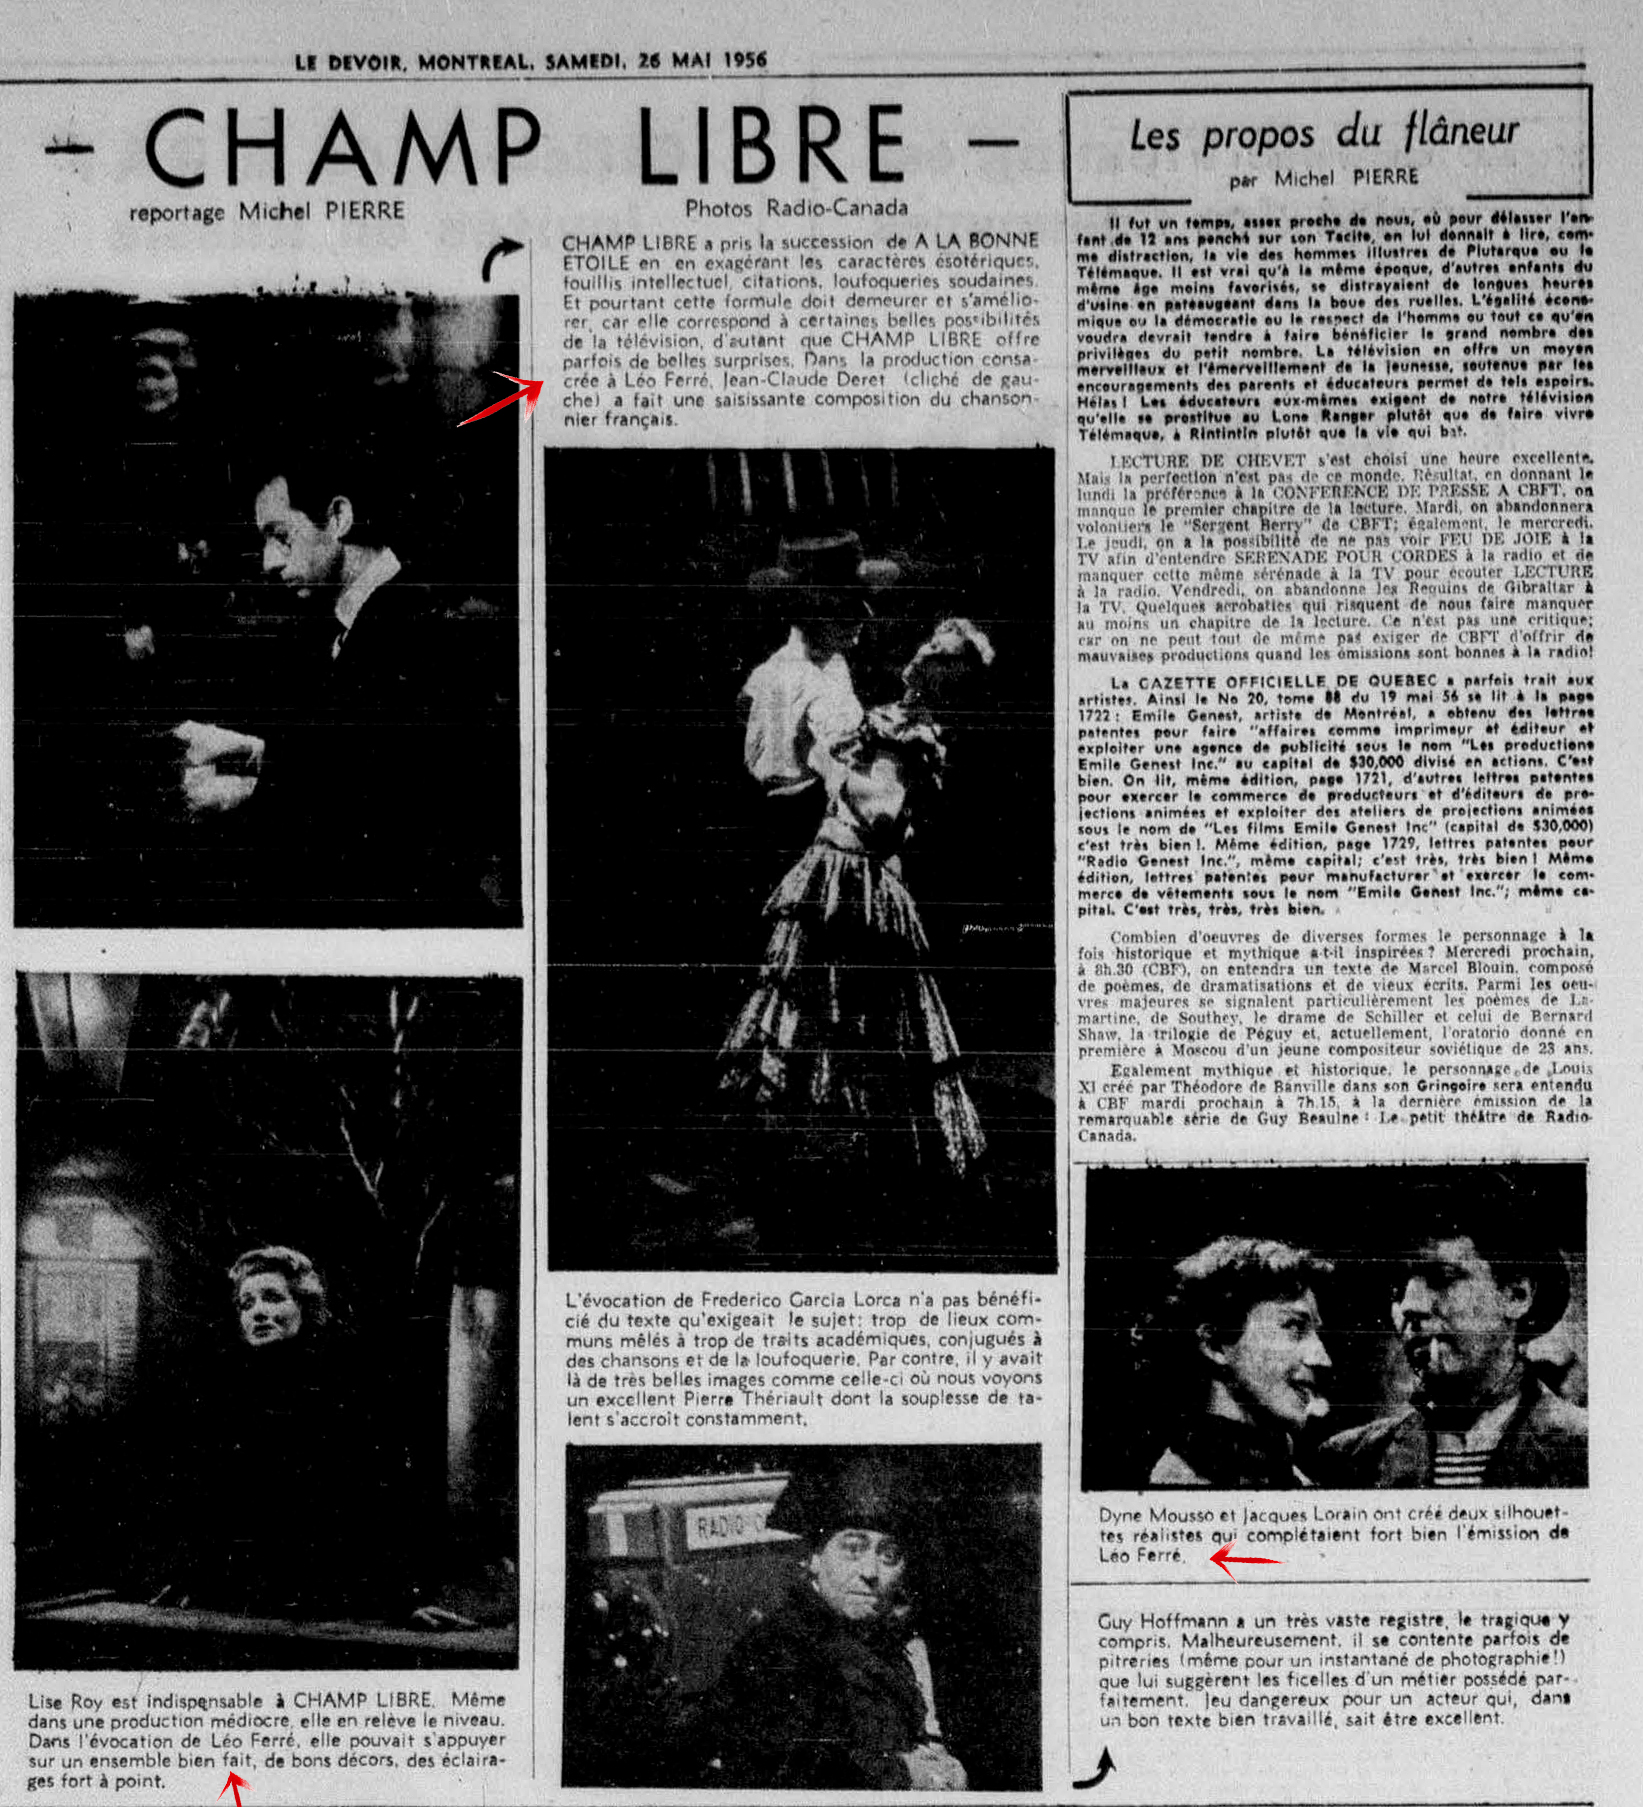 Léo Ferré - Le devoir, samedi 26 mai 1956